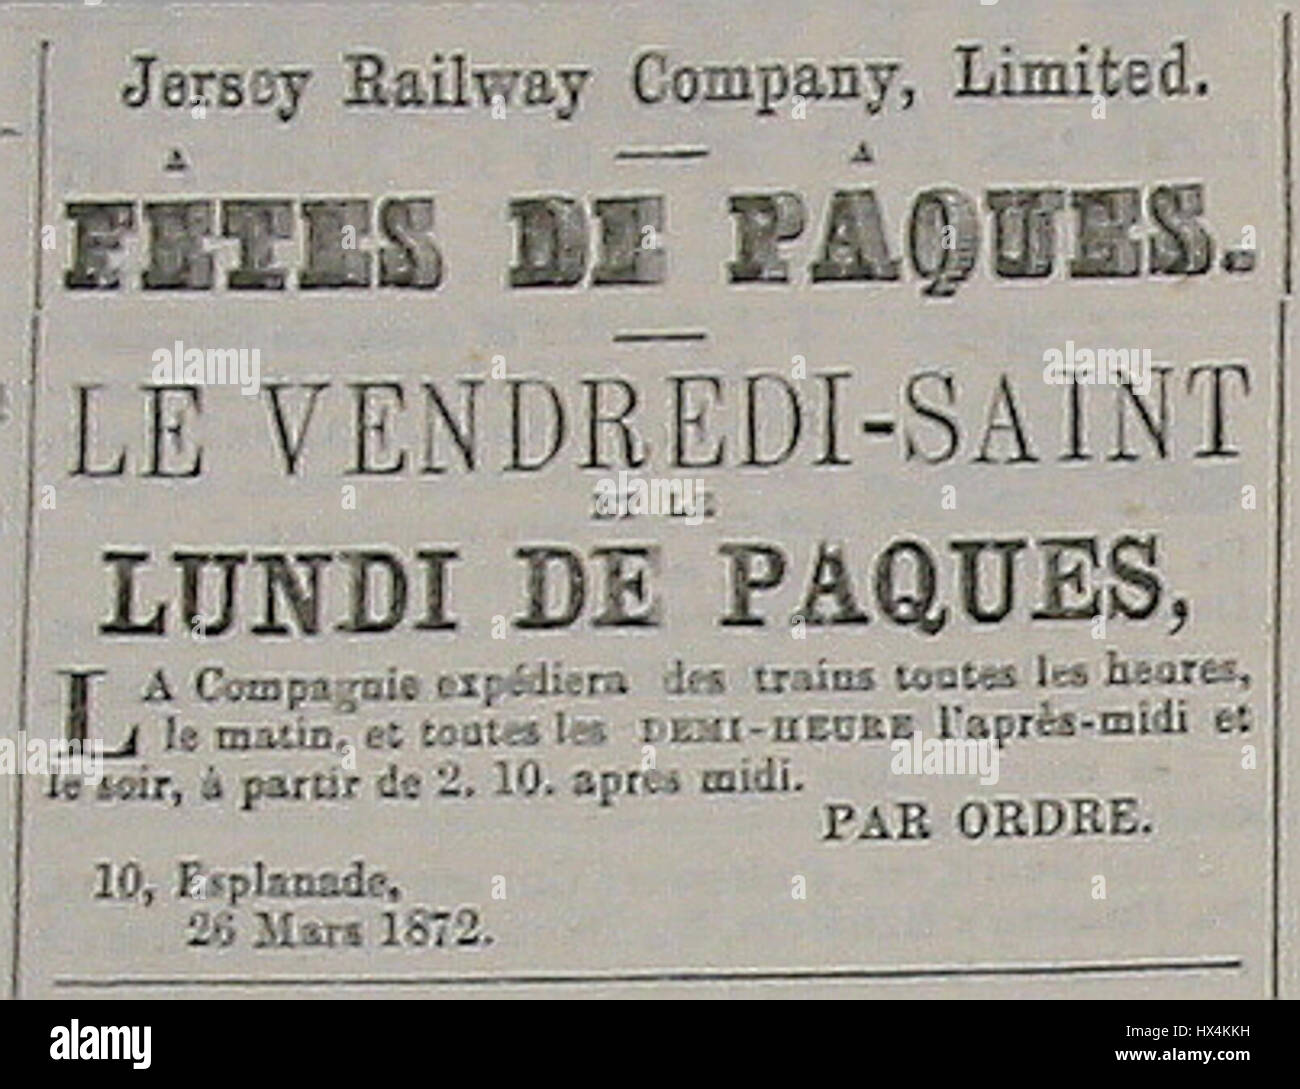 Jersey Railway Company 26 March 1872 Stock Photo